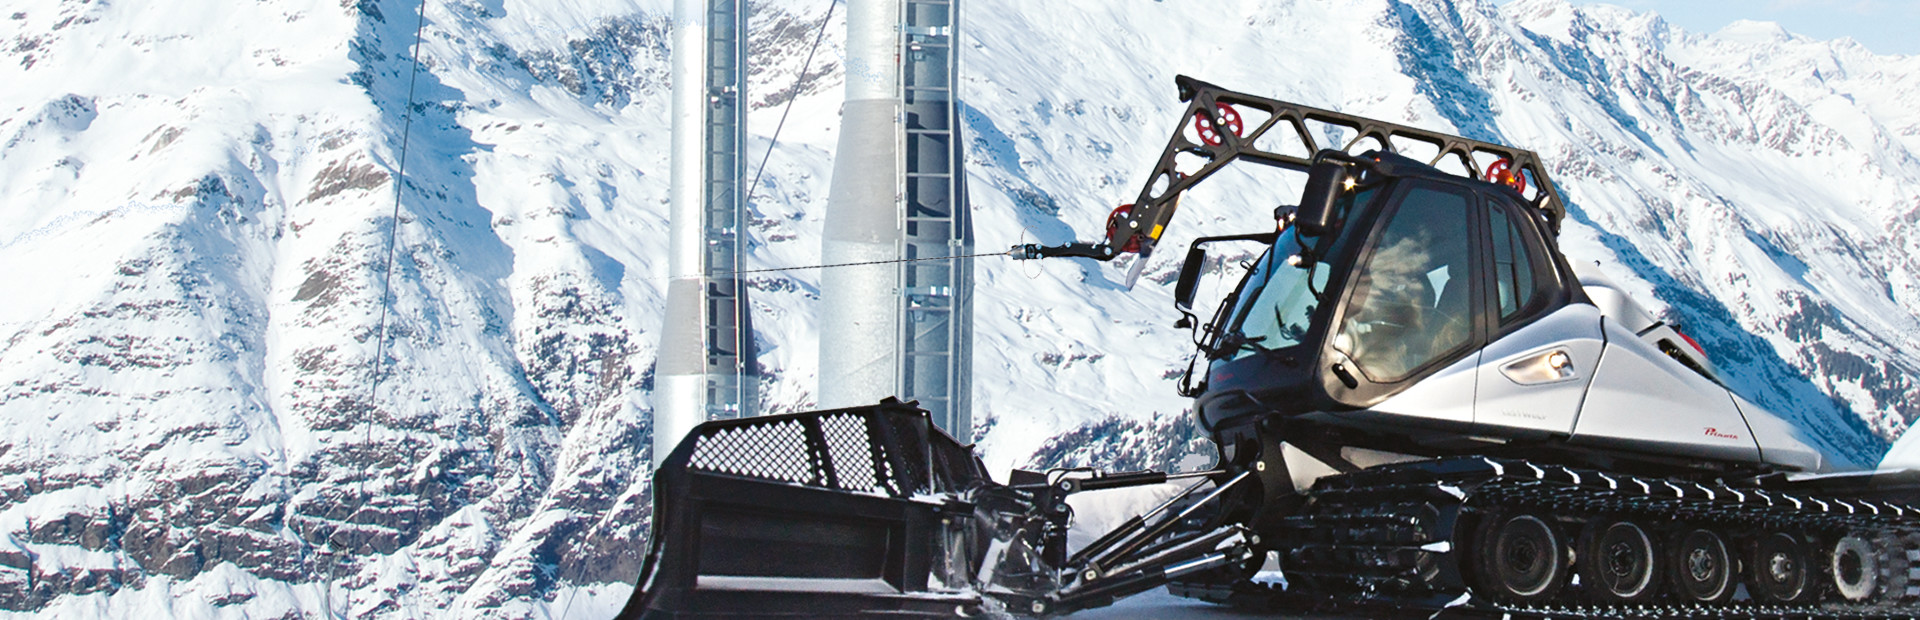 Ski-World Simulator cover image